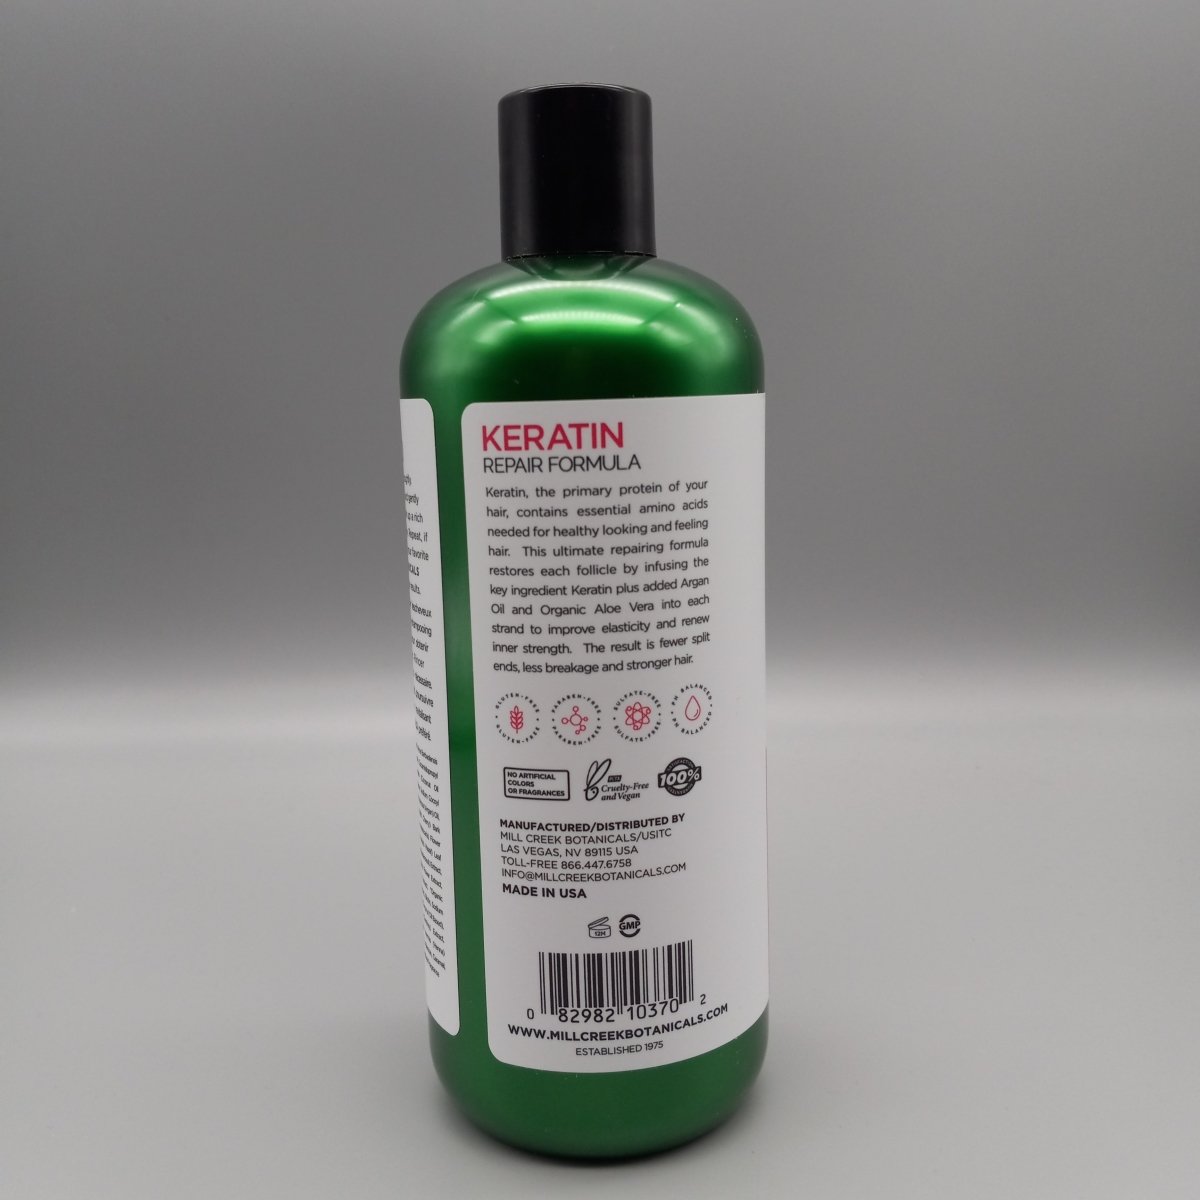 Mill Creek Botanicals-Keratin Repair Formula- Shampoo-Vegan/Paraben/Sulfate Free 14oz